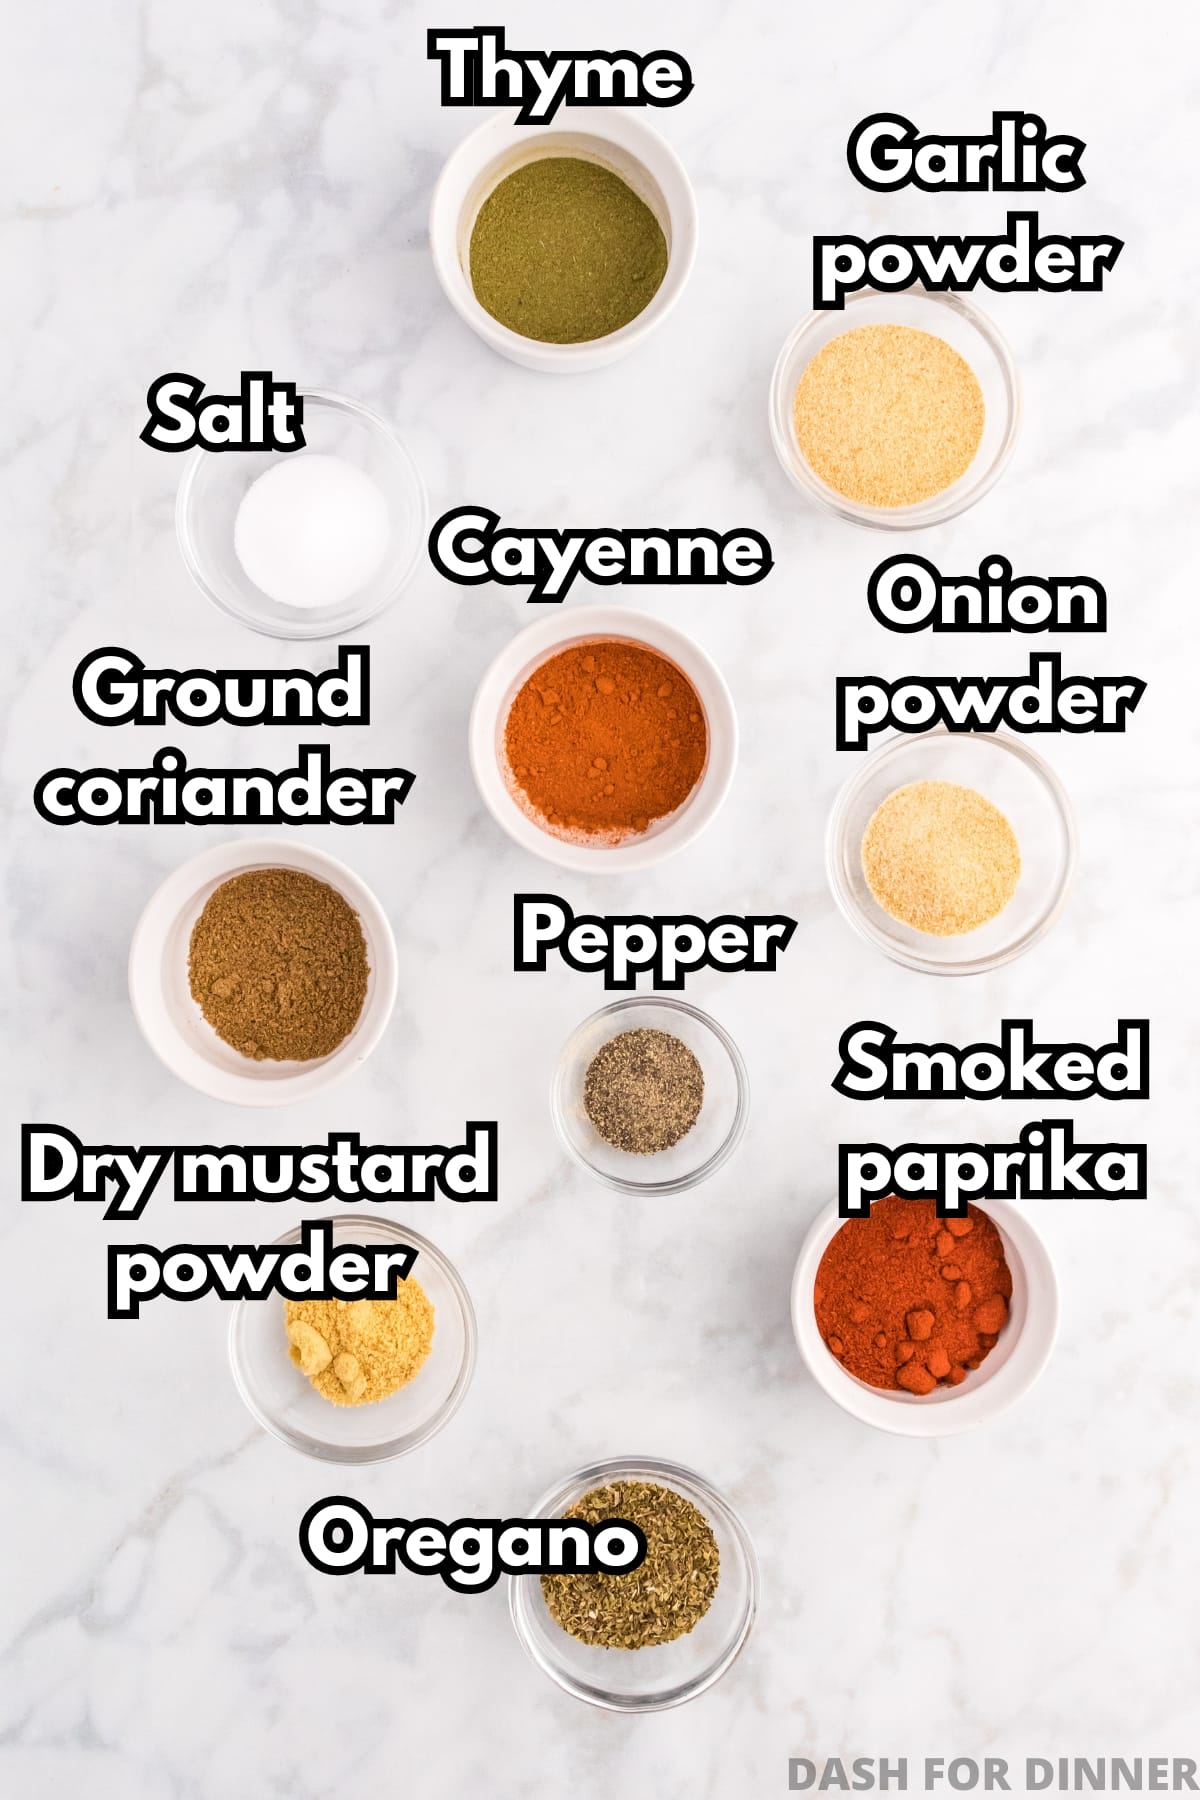 Small bowls of various seasonings, including cayenne, pepper, garlic powder, onion powder, etc.